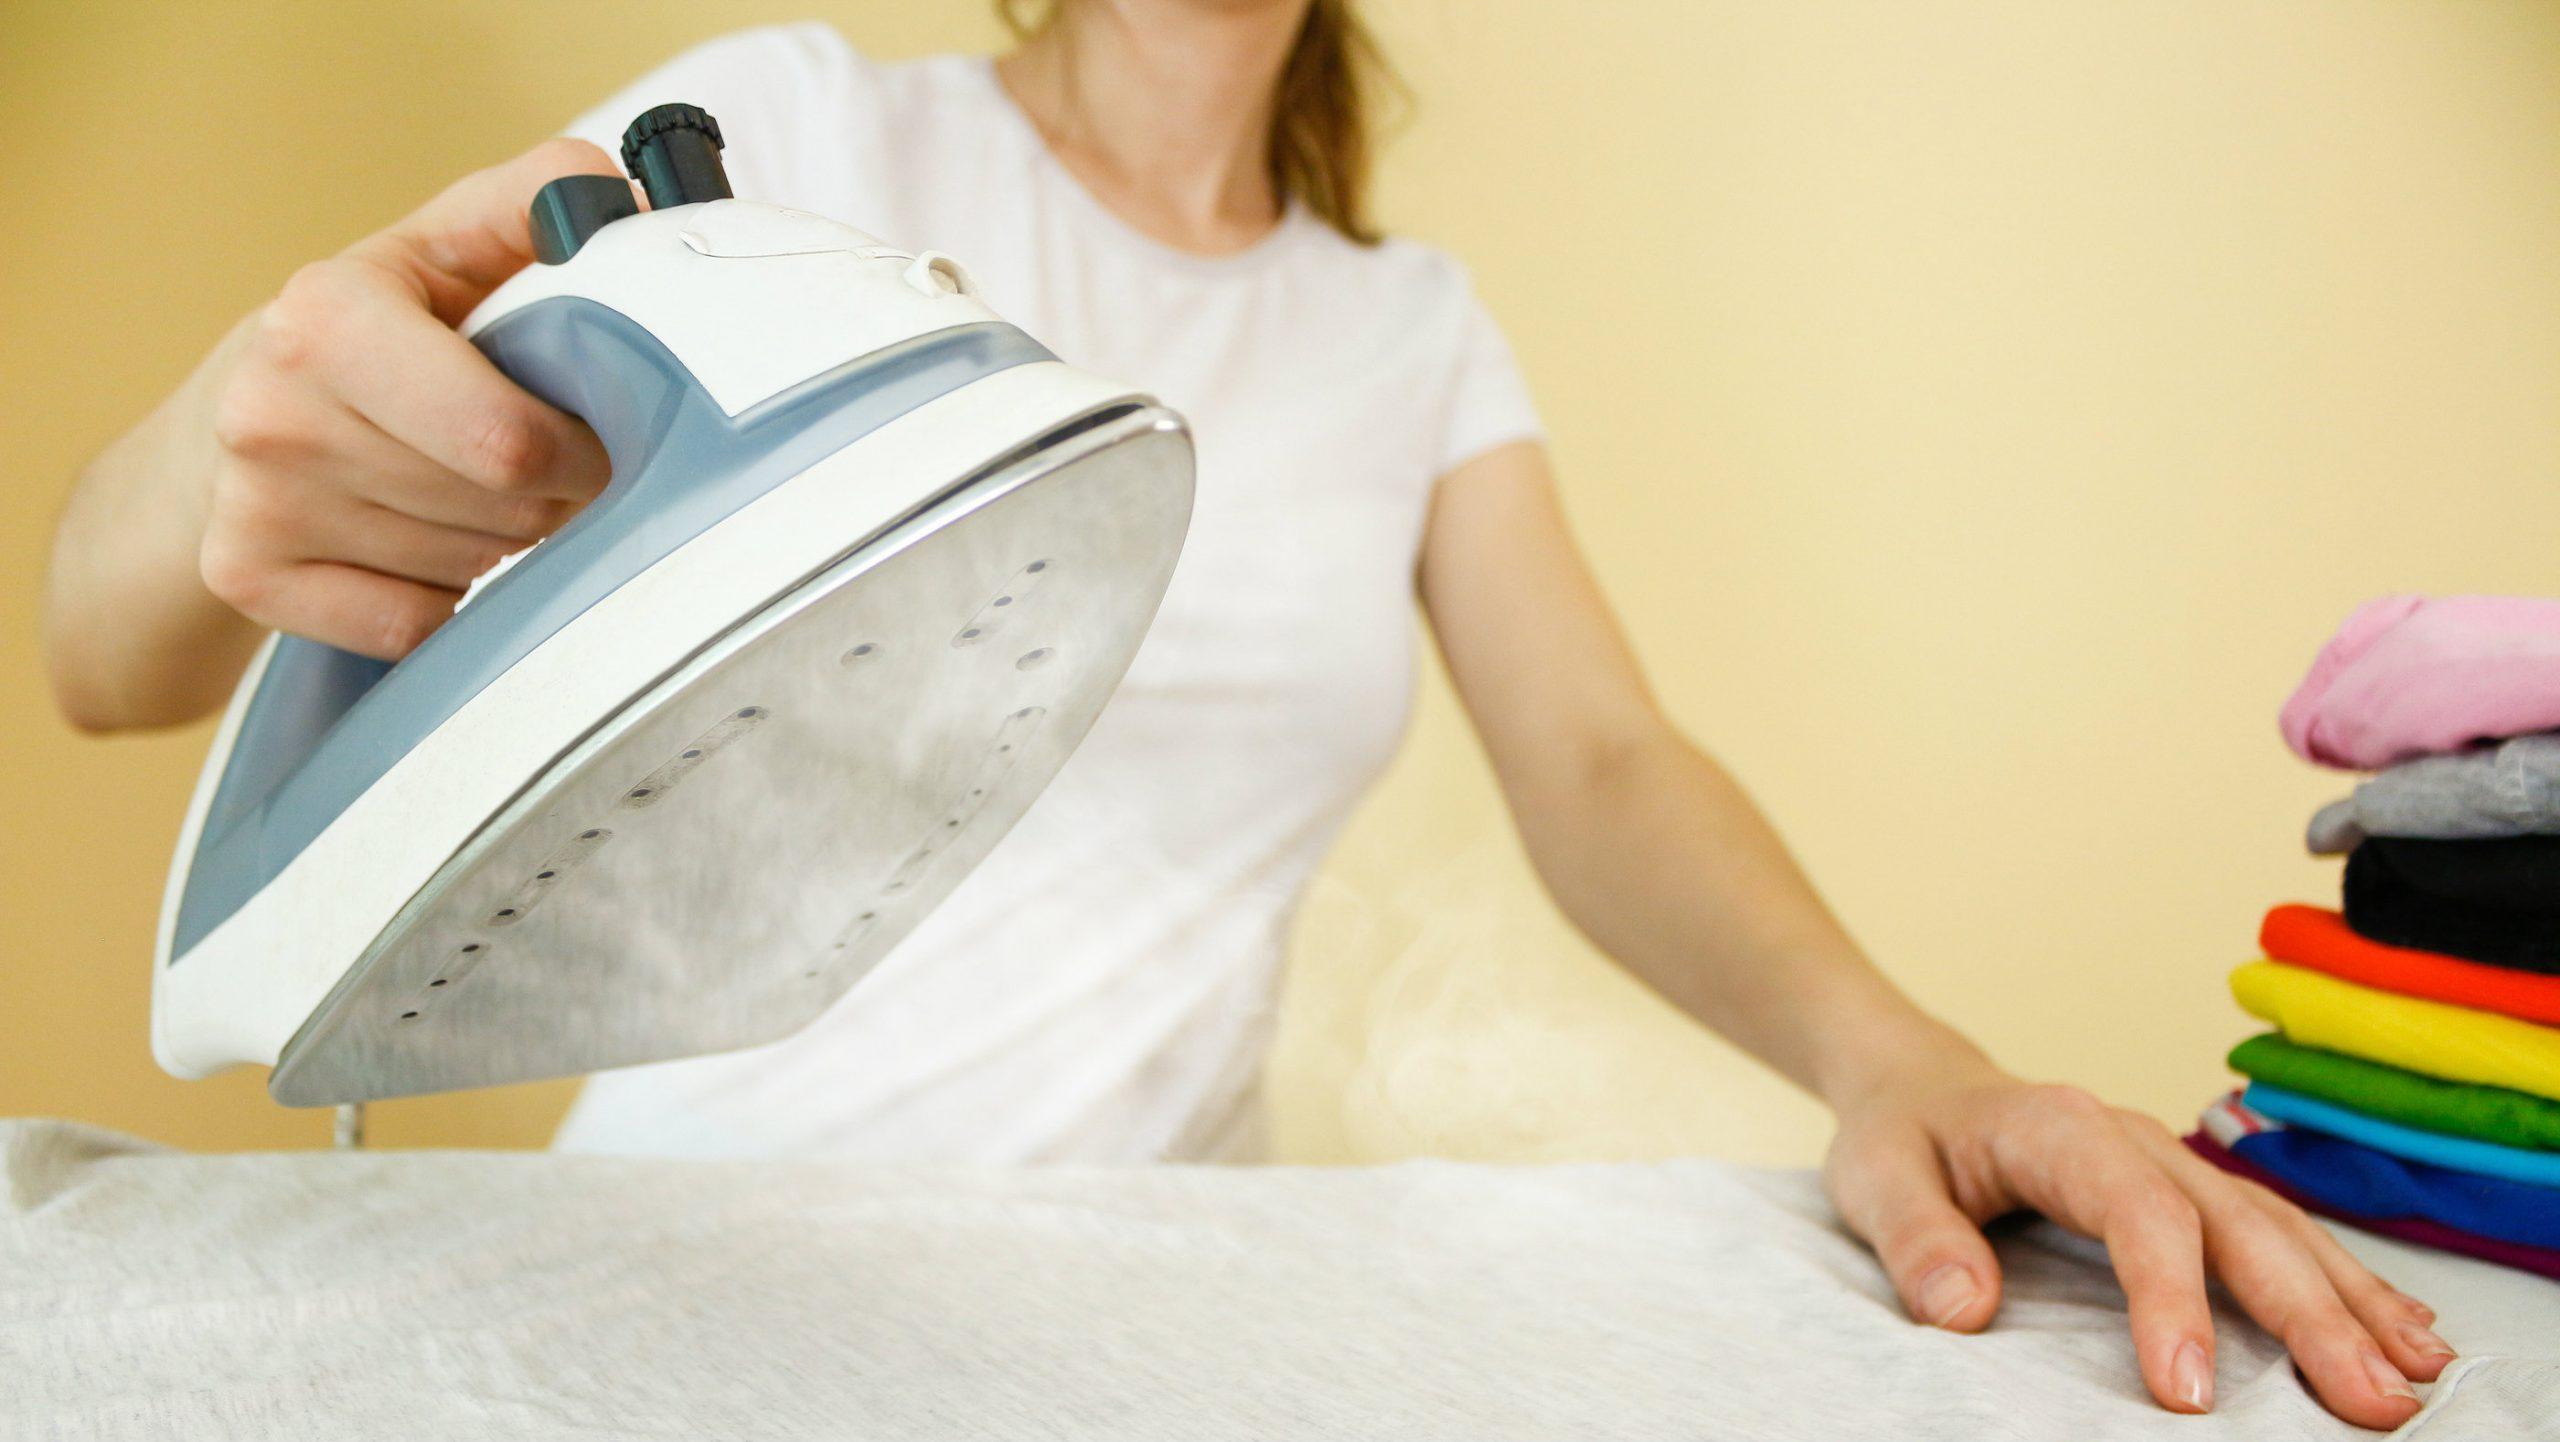 professional ironing benefits